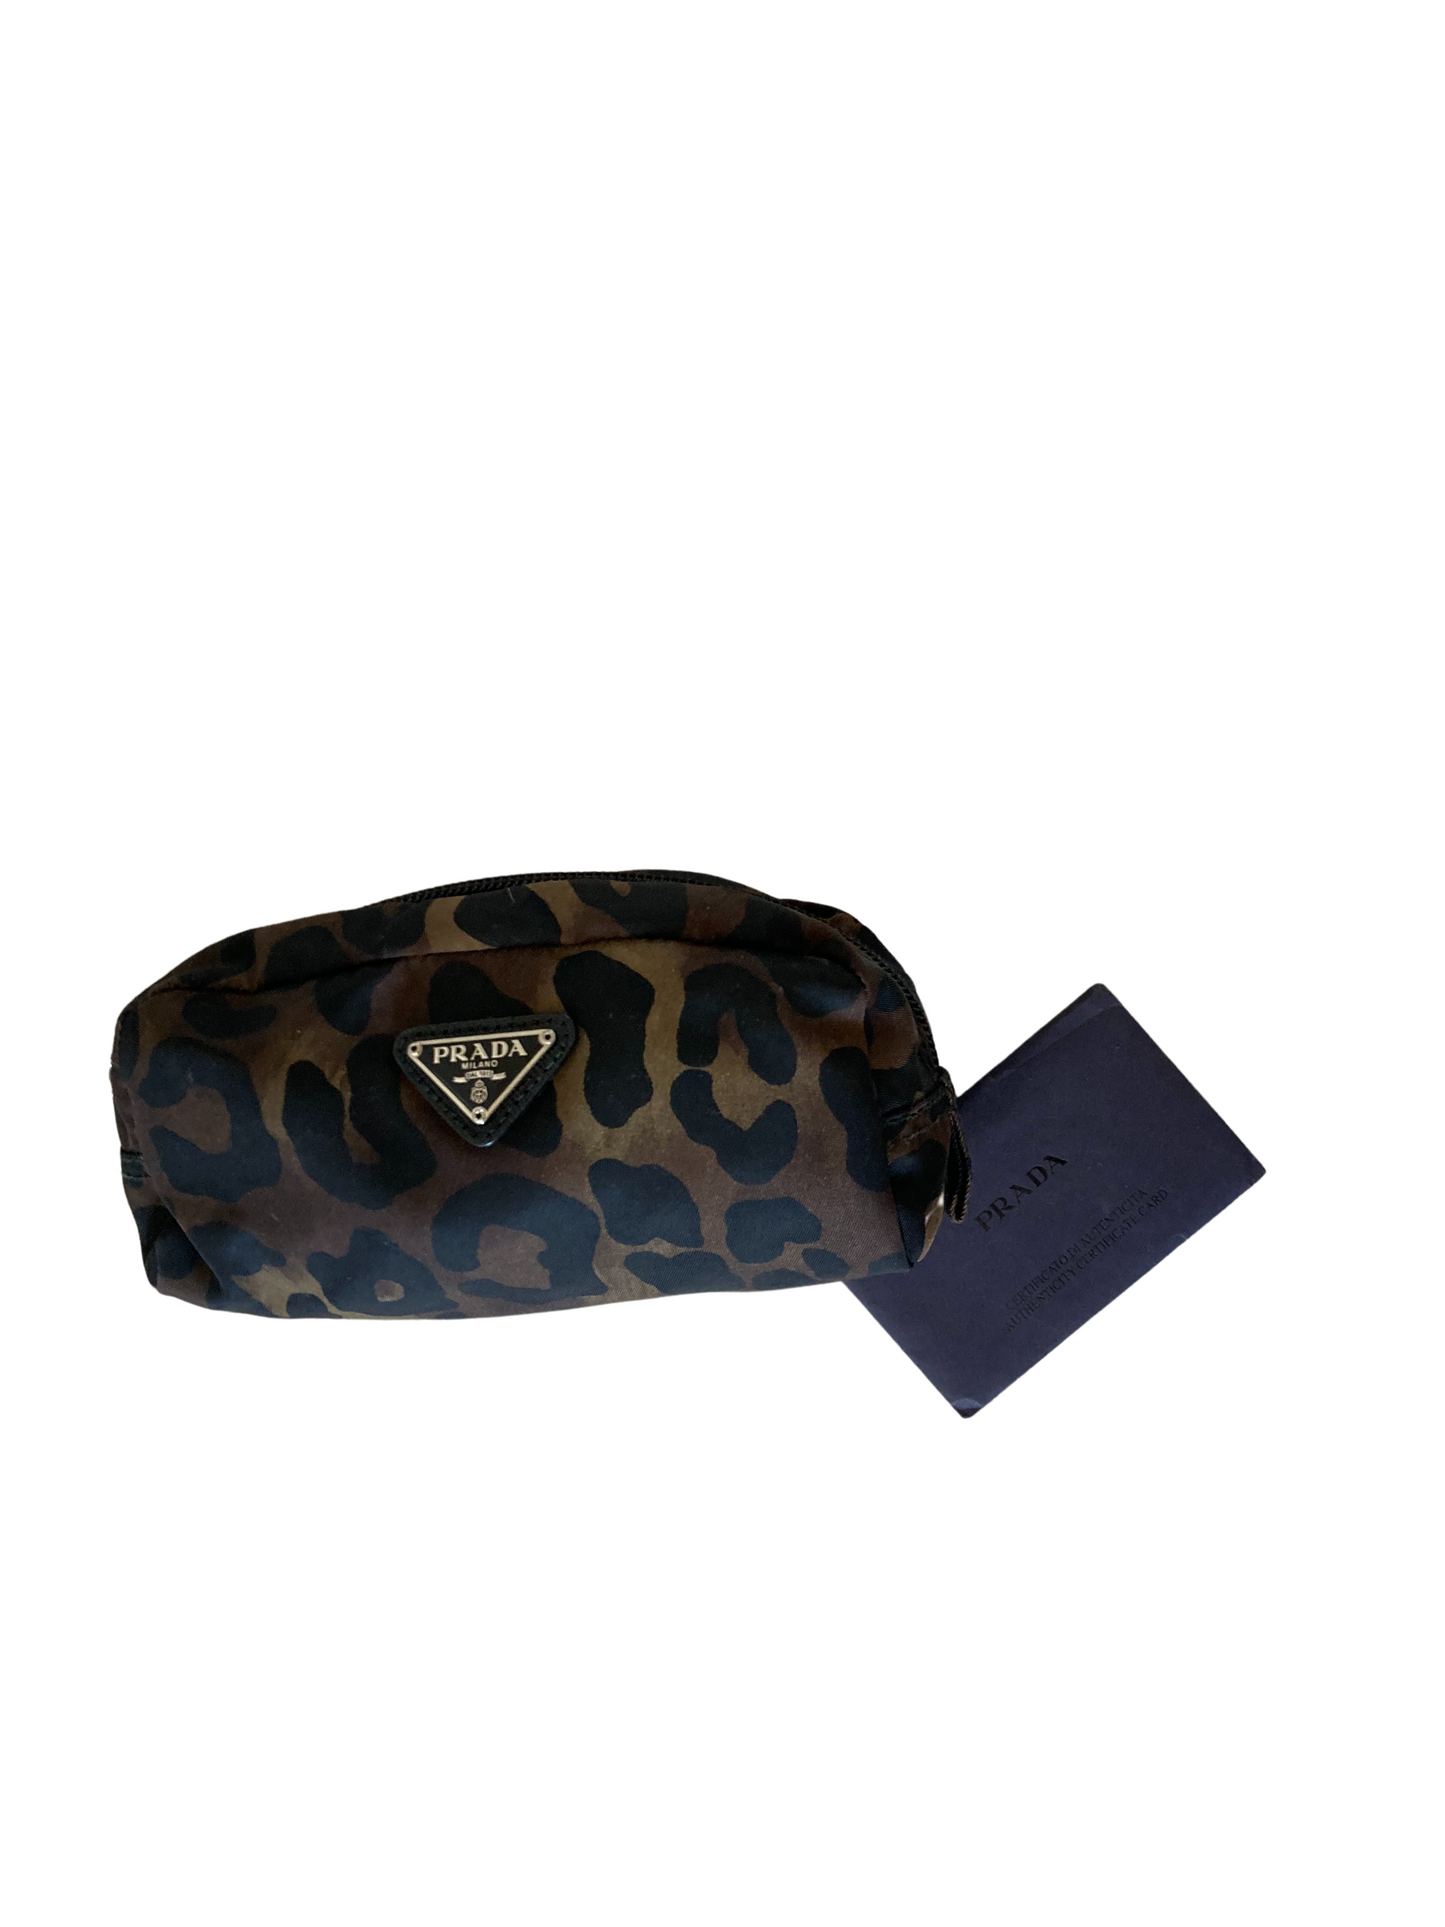 Prada Leopard Black Nylon Pouch